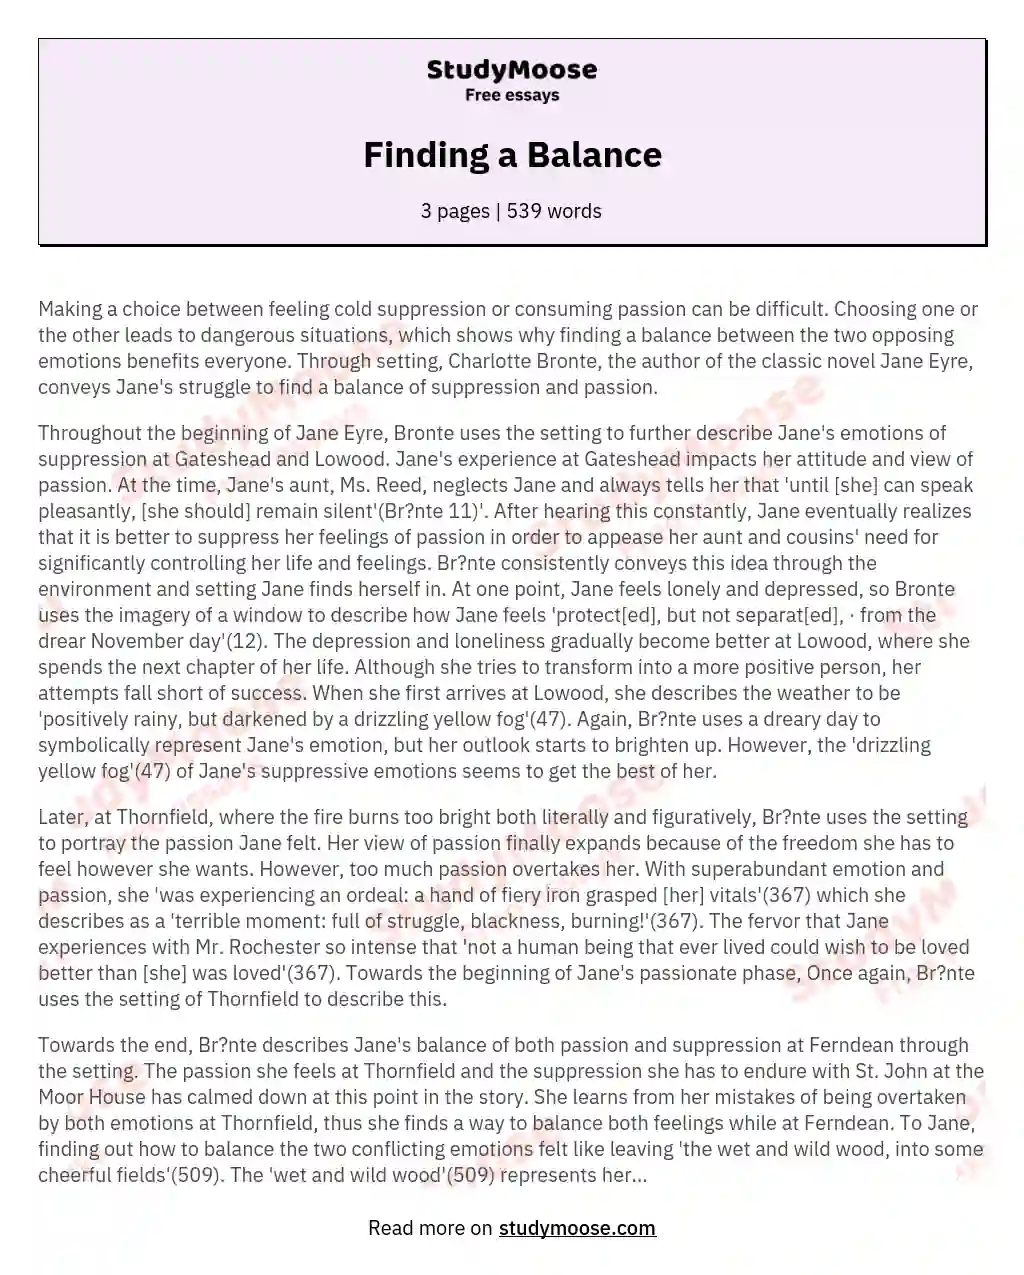 Finding a Balance essay